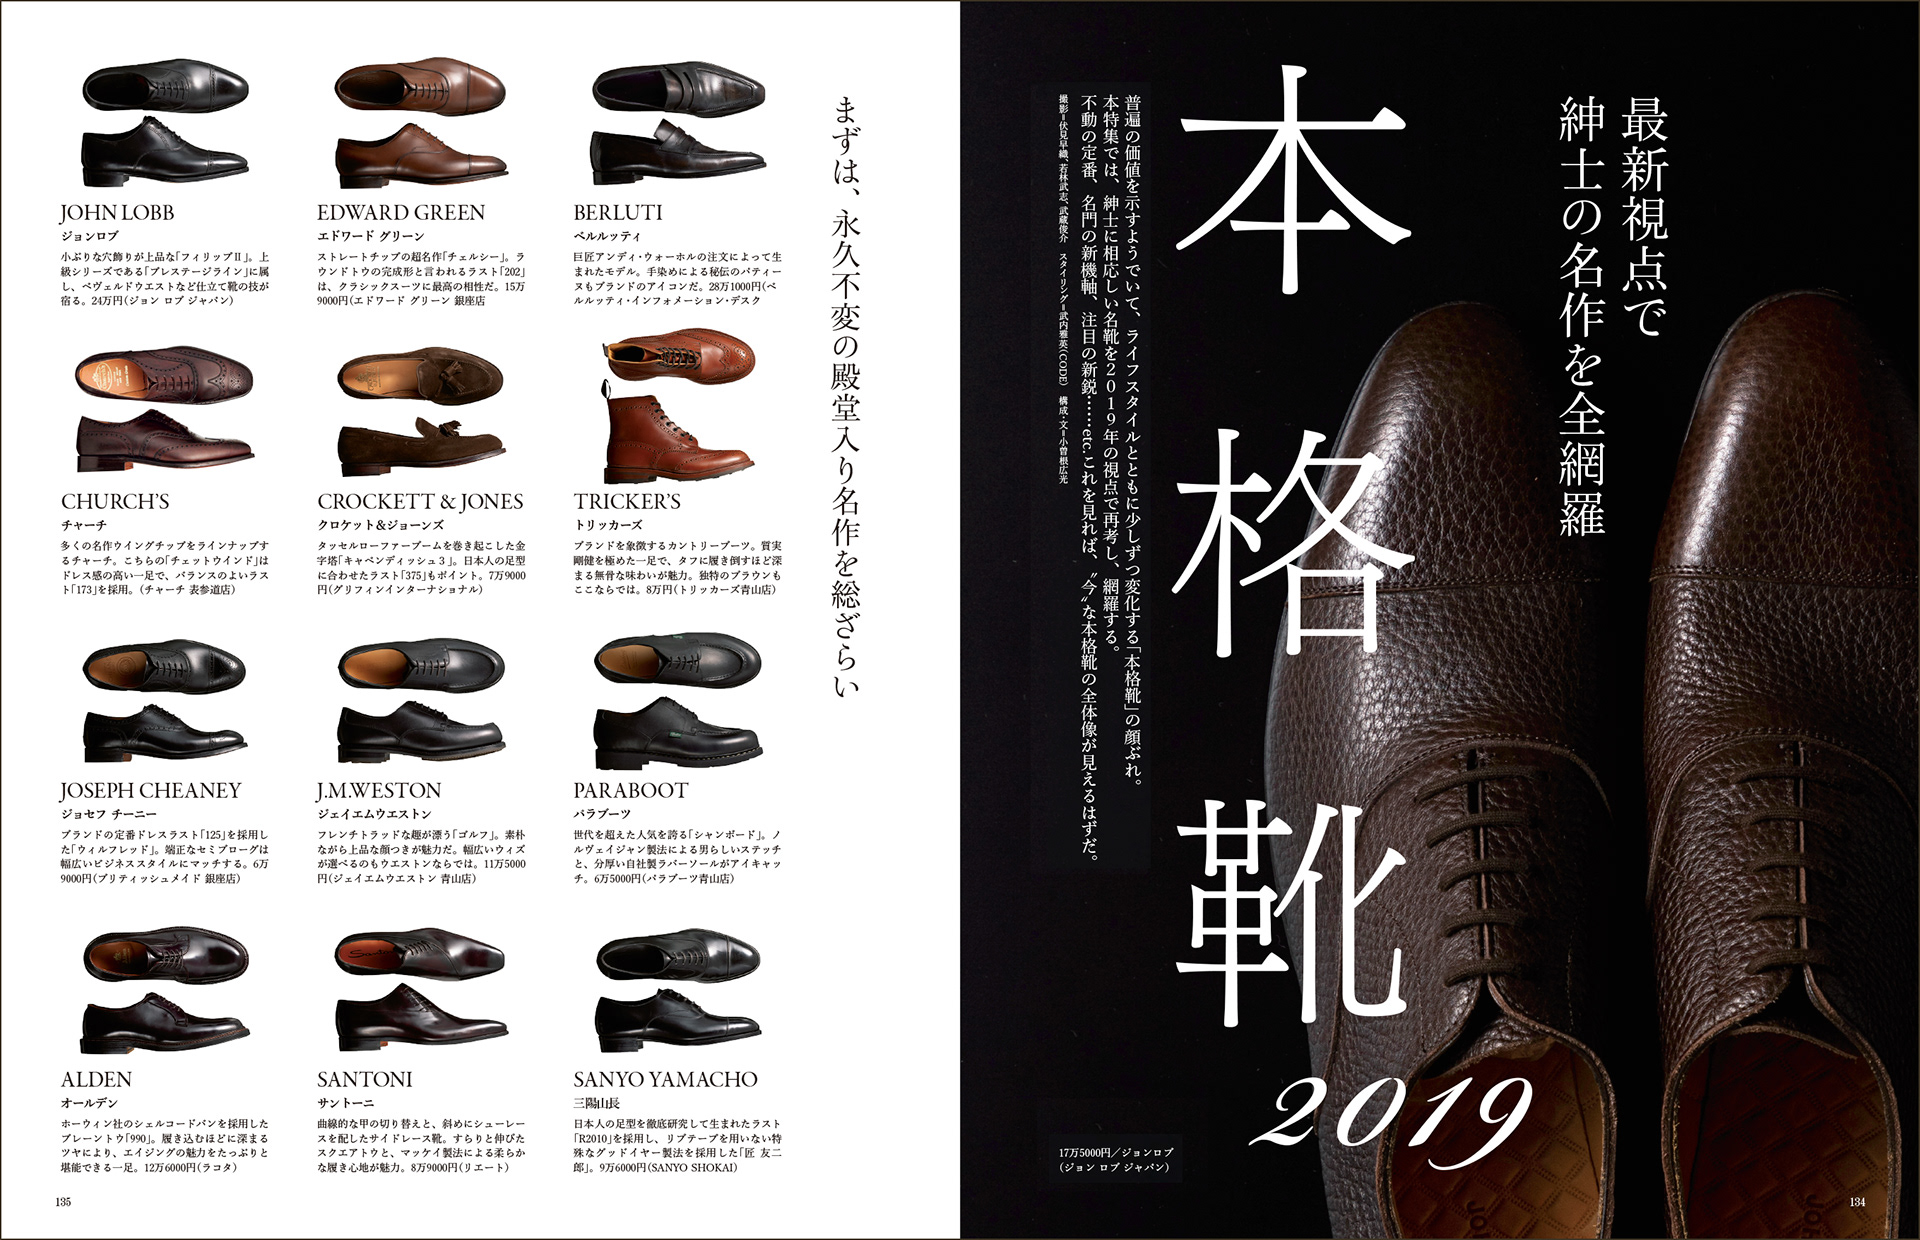 Imada Takashi Editorial Design Work Men S Ex